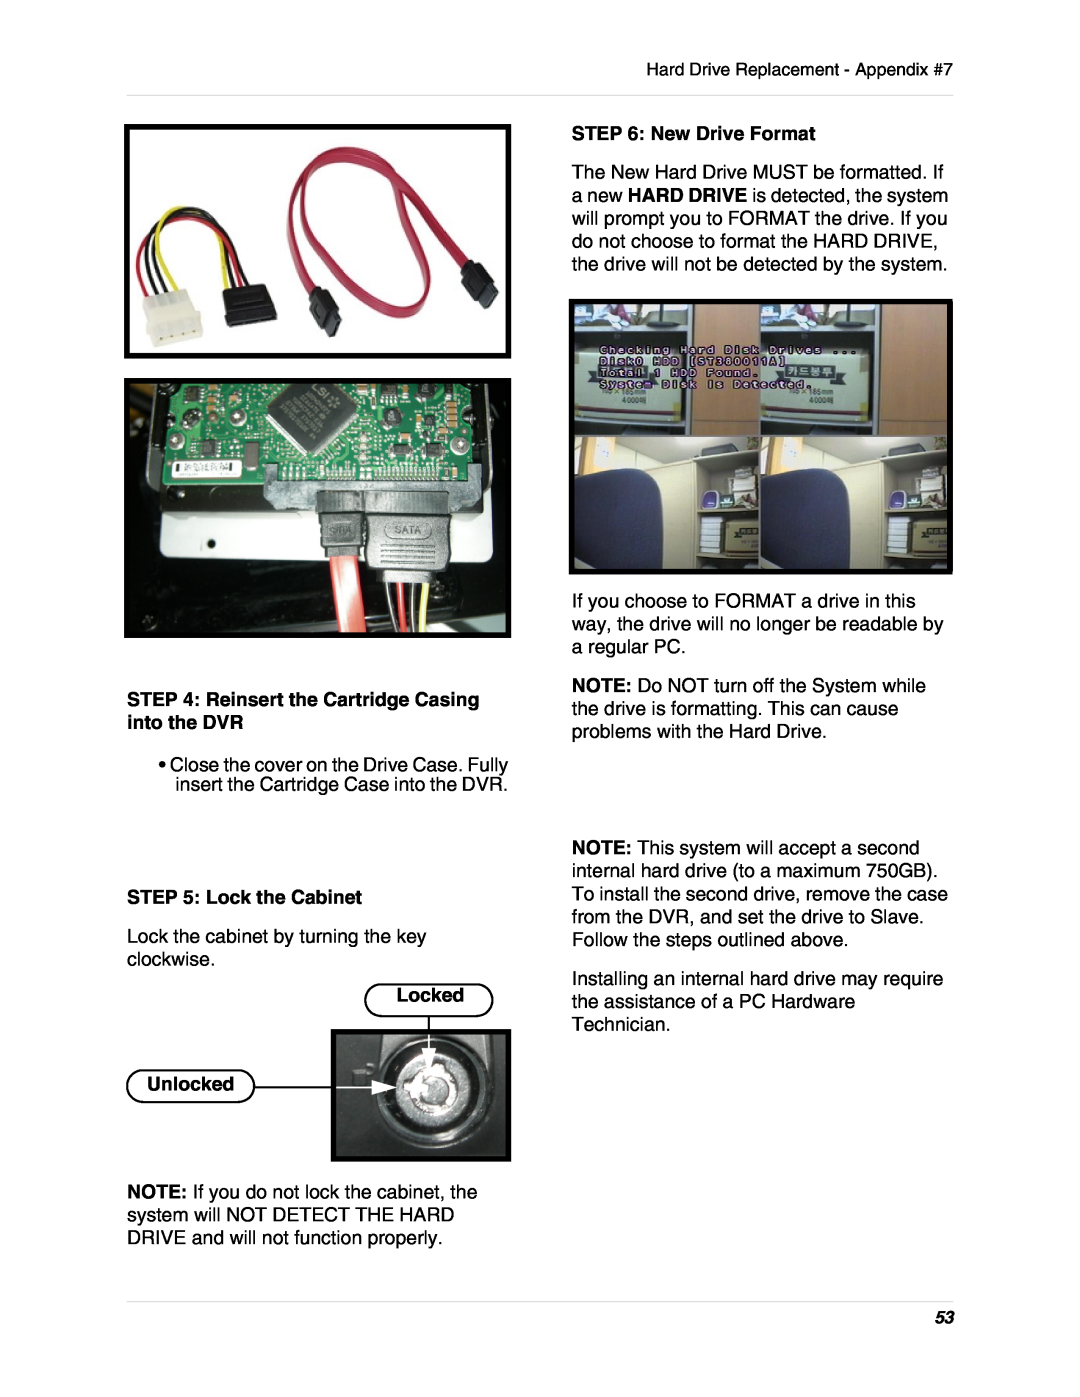 LOREX Technology L19lD1616501 instruction manual Lock the Cabinet, Locked Unlocked, New Drive Format 